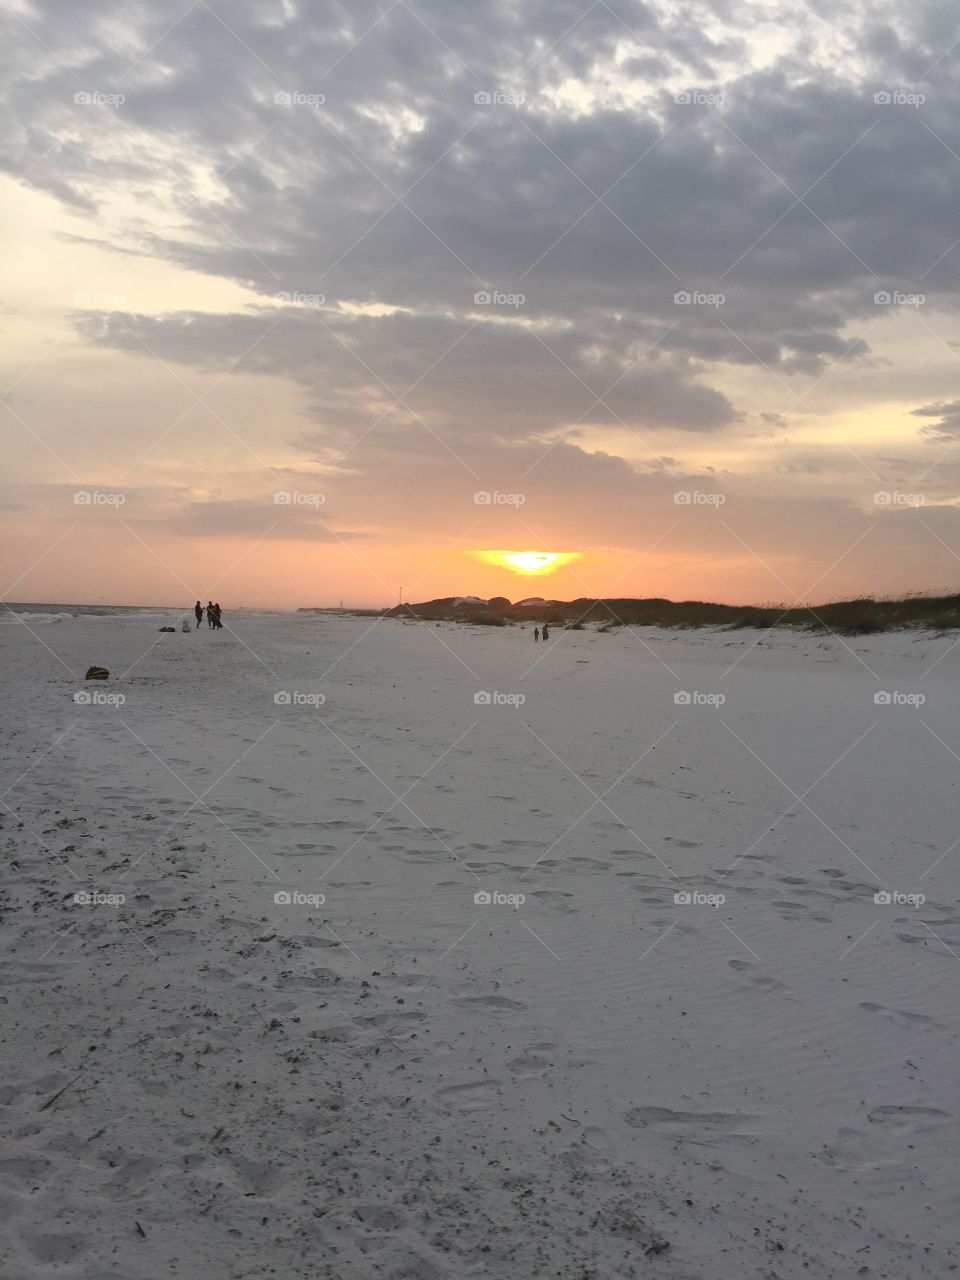 Sunset in Destin Florida 